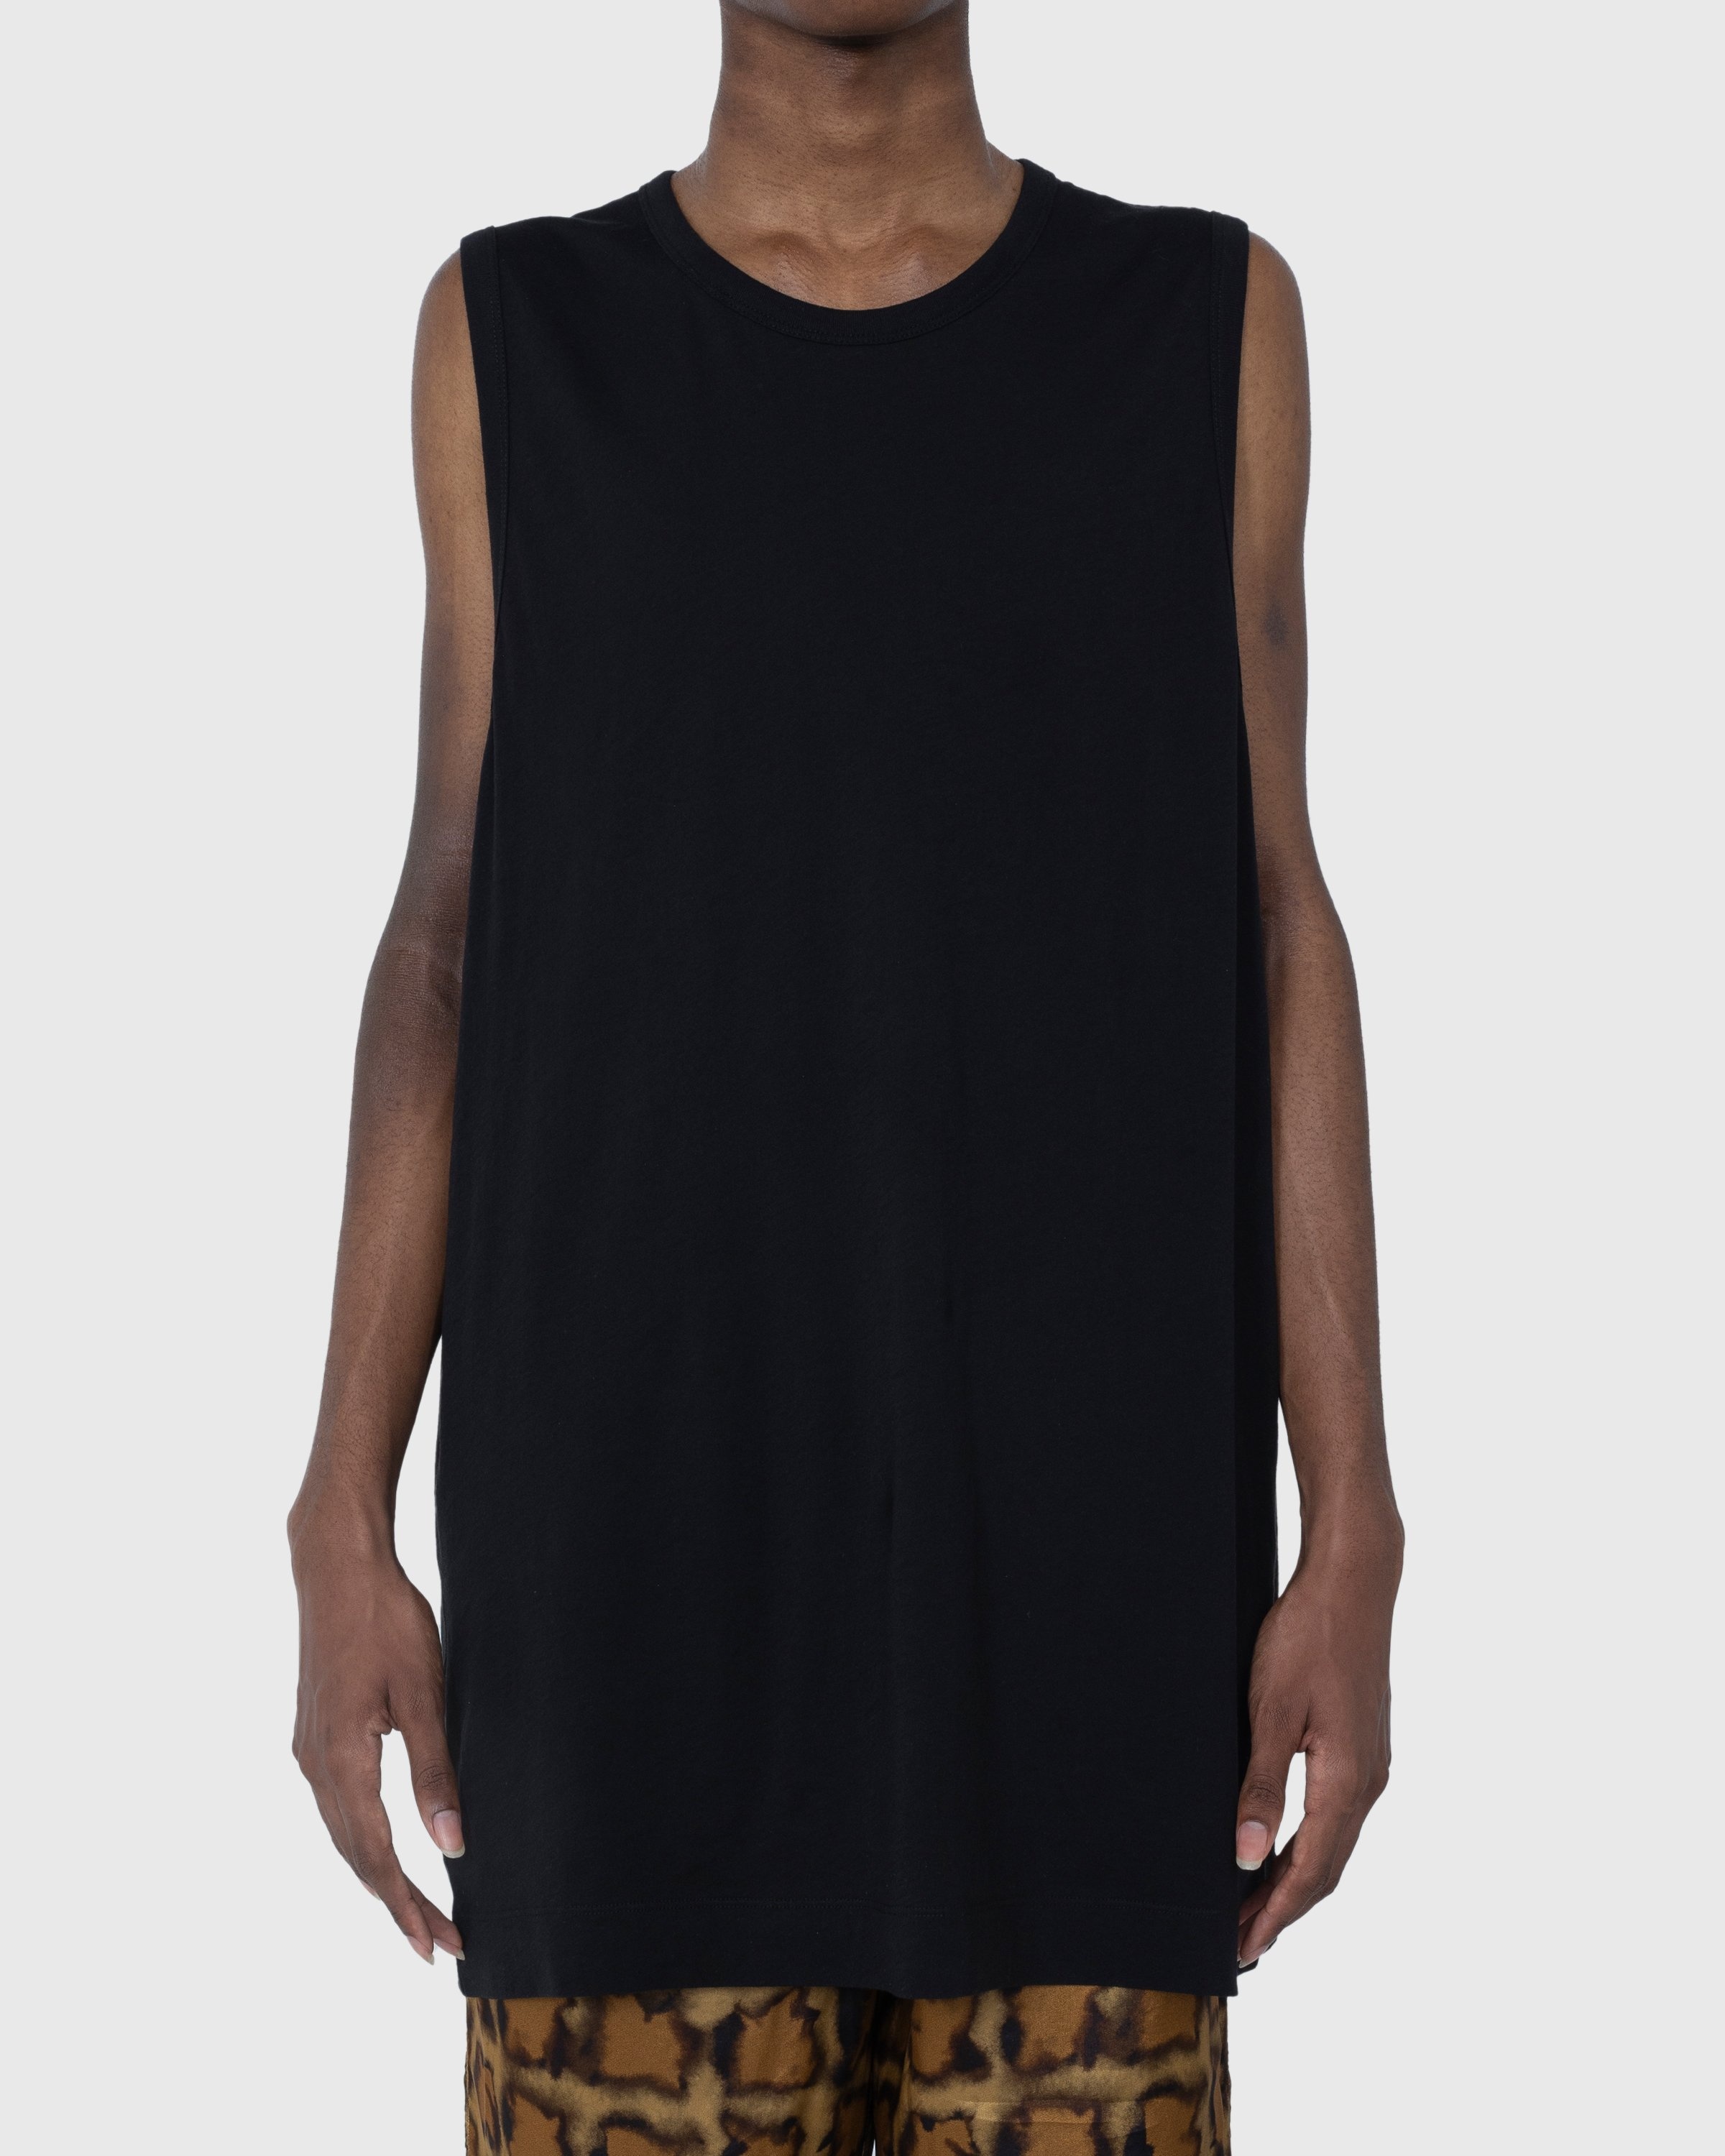 Dries van Noten – Hanator Sleeveless T-Shirt Black - Tops - Black - Image 2